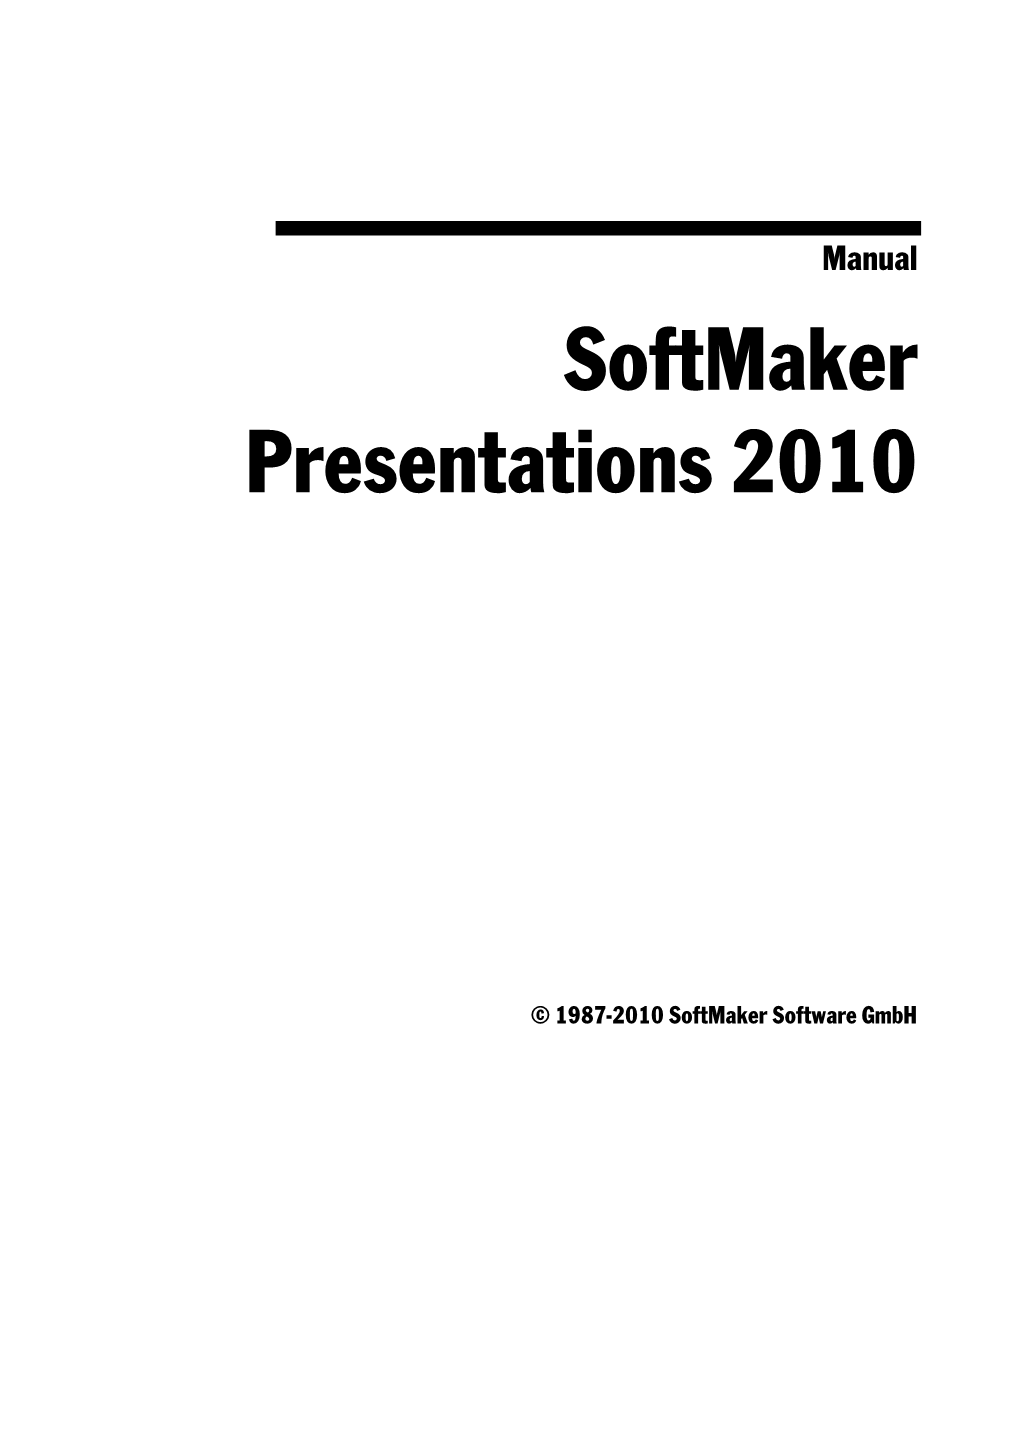 Manual Softmaker Presentations 2010